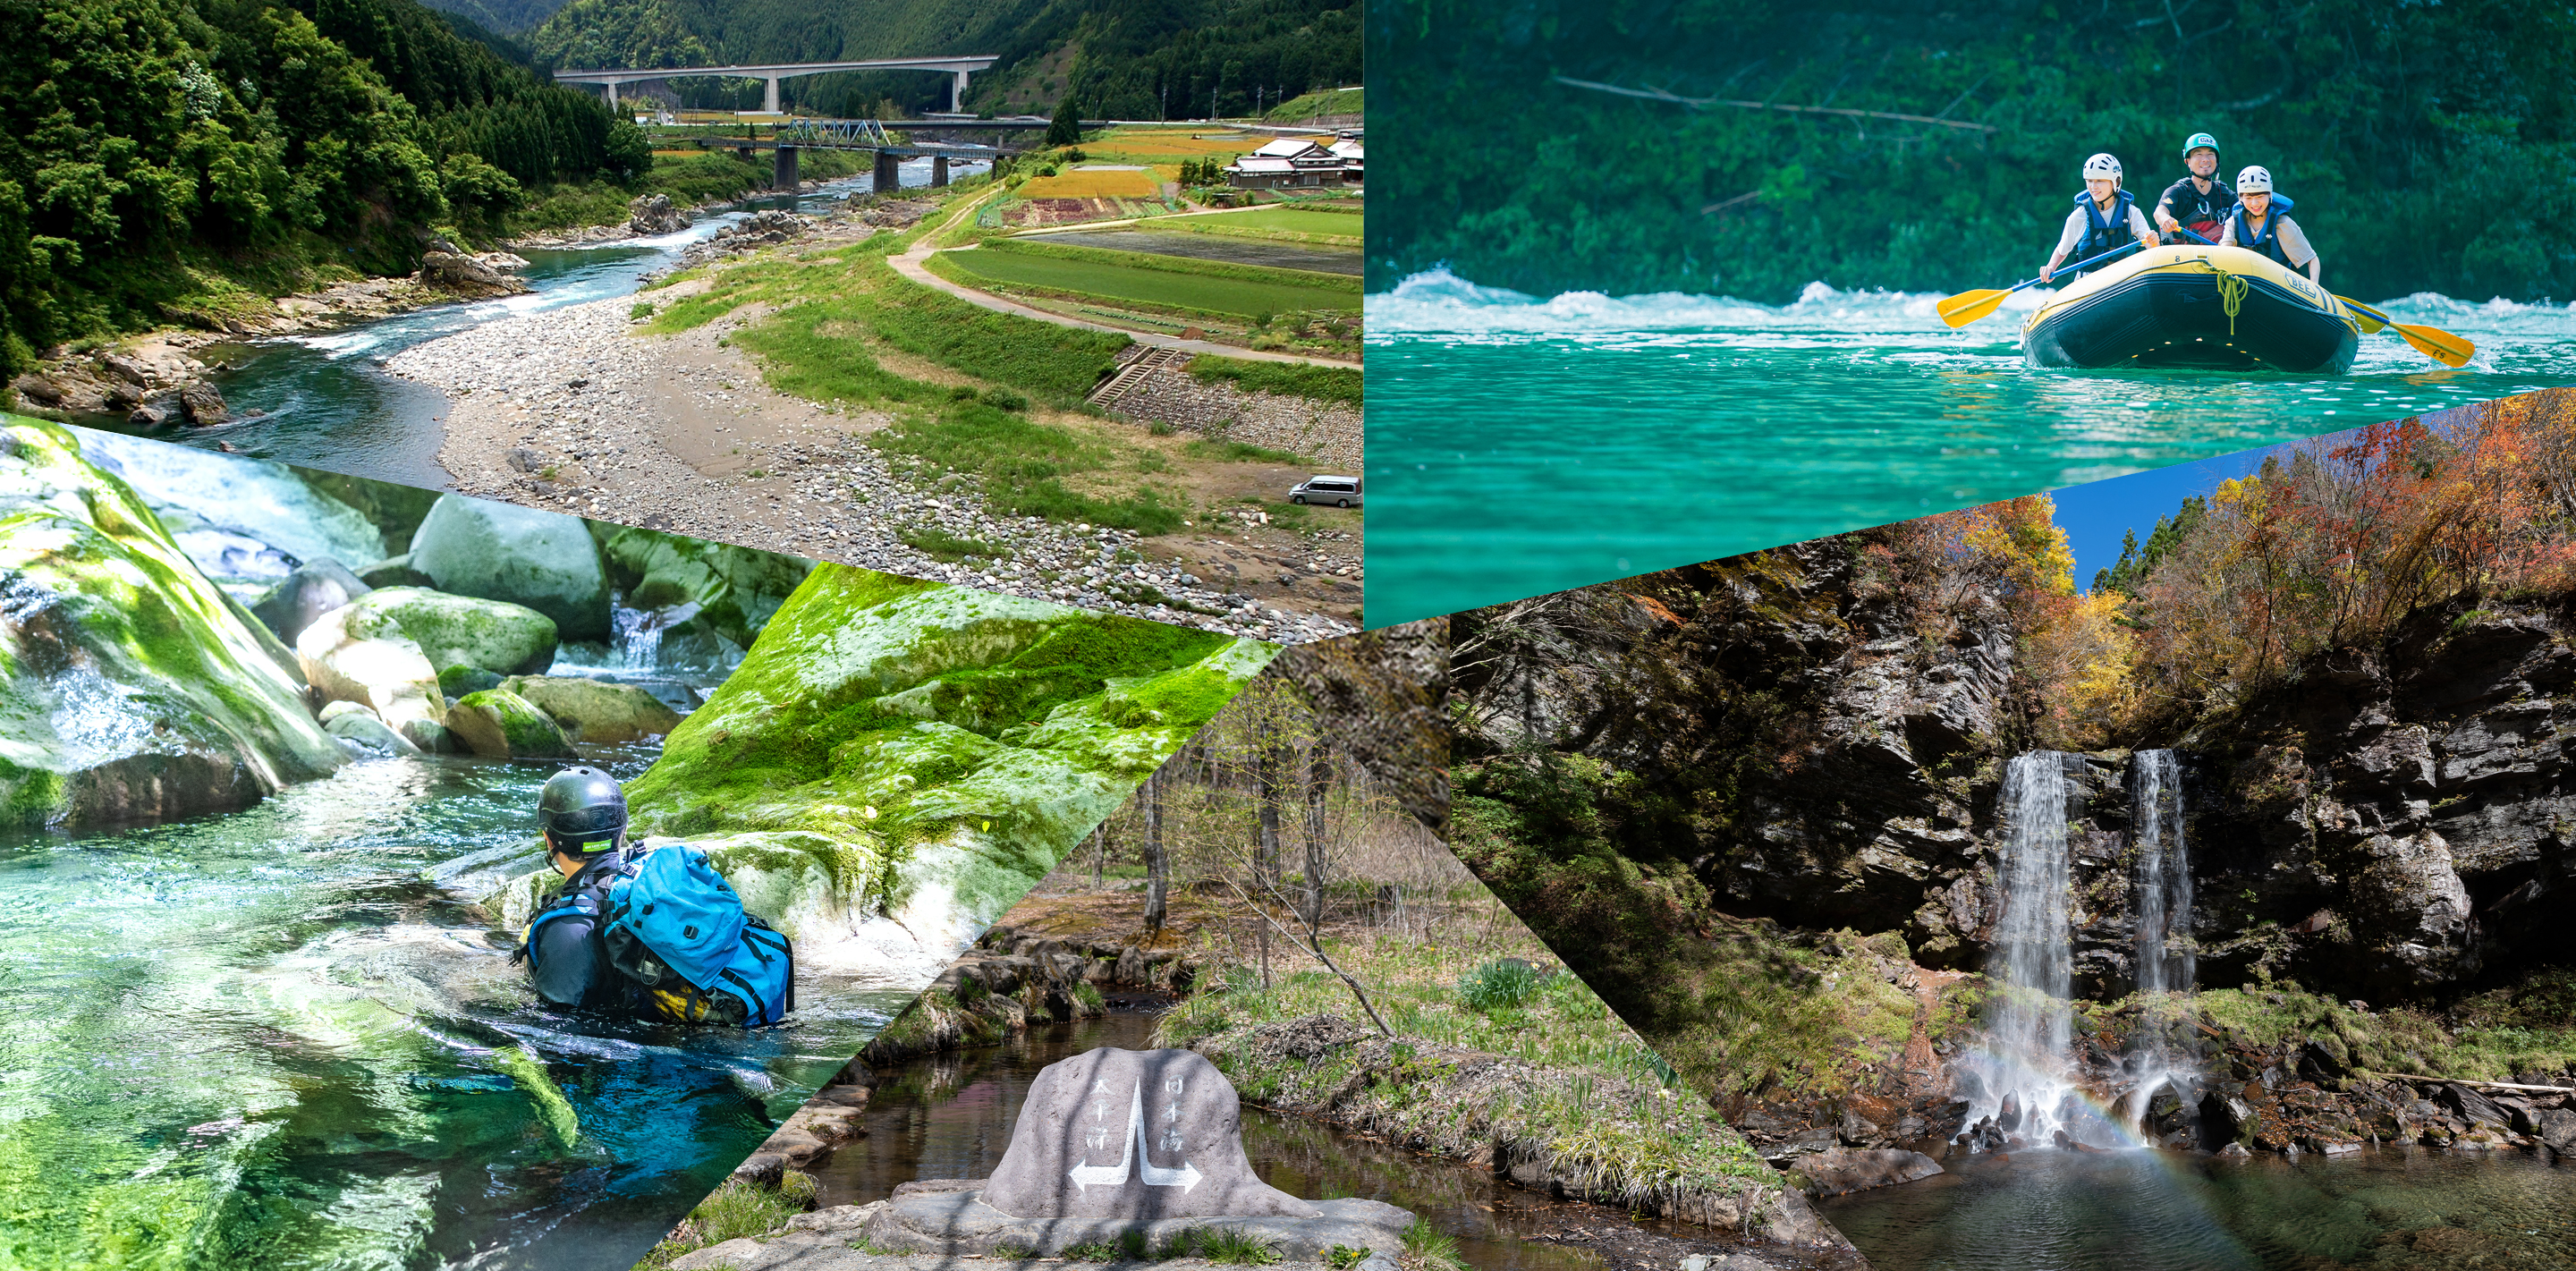 Meotodaki Waterfalls and headwater of Nagaragawa River, a river brings lives with a long history